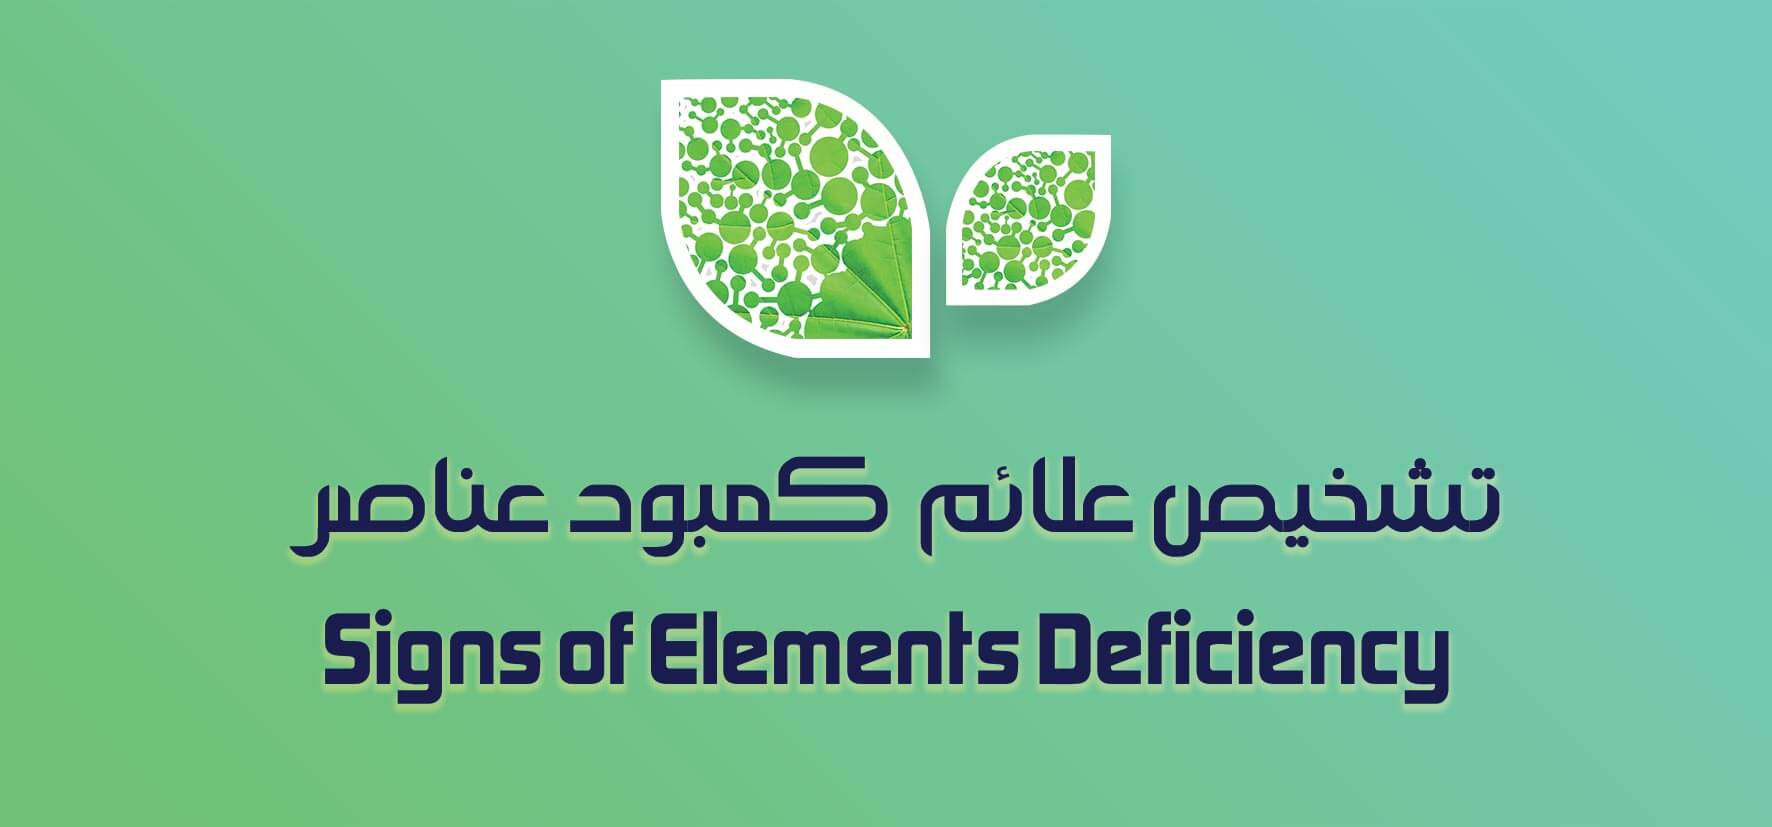 Deficiency of Elements